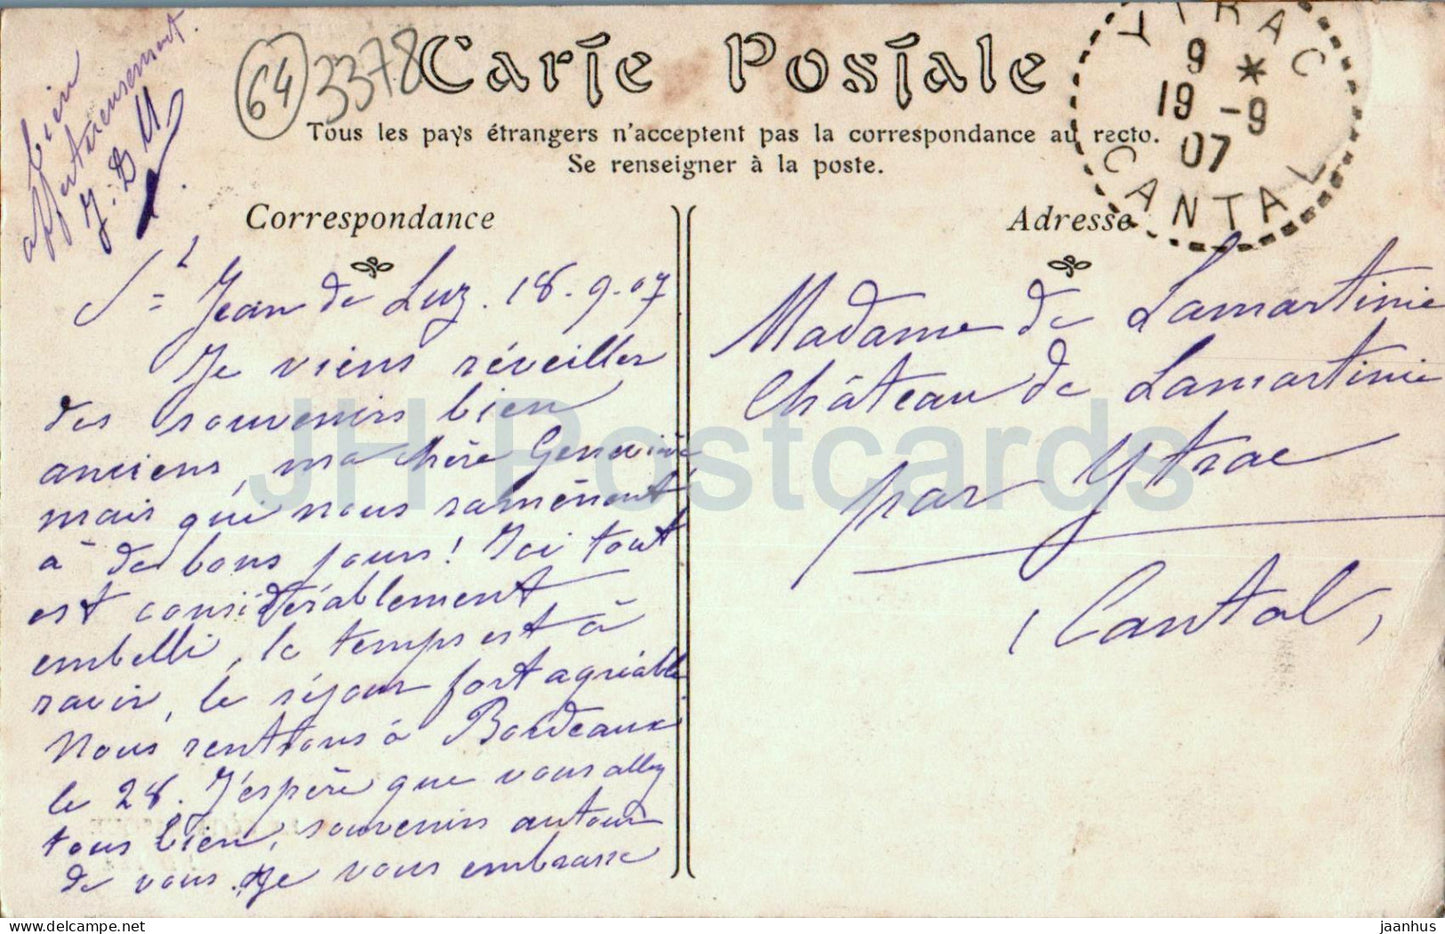 Saint Jean de Luz - Vue generale prise de la Pointe Sainte Barbe - alte Postkarte - 1907 - Frankreich - gebraucht